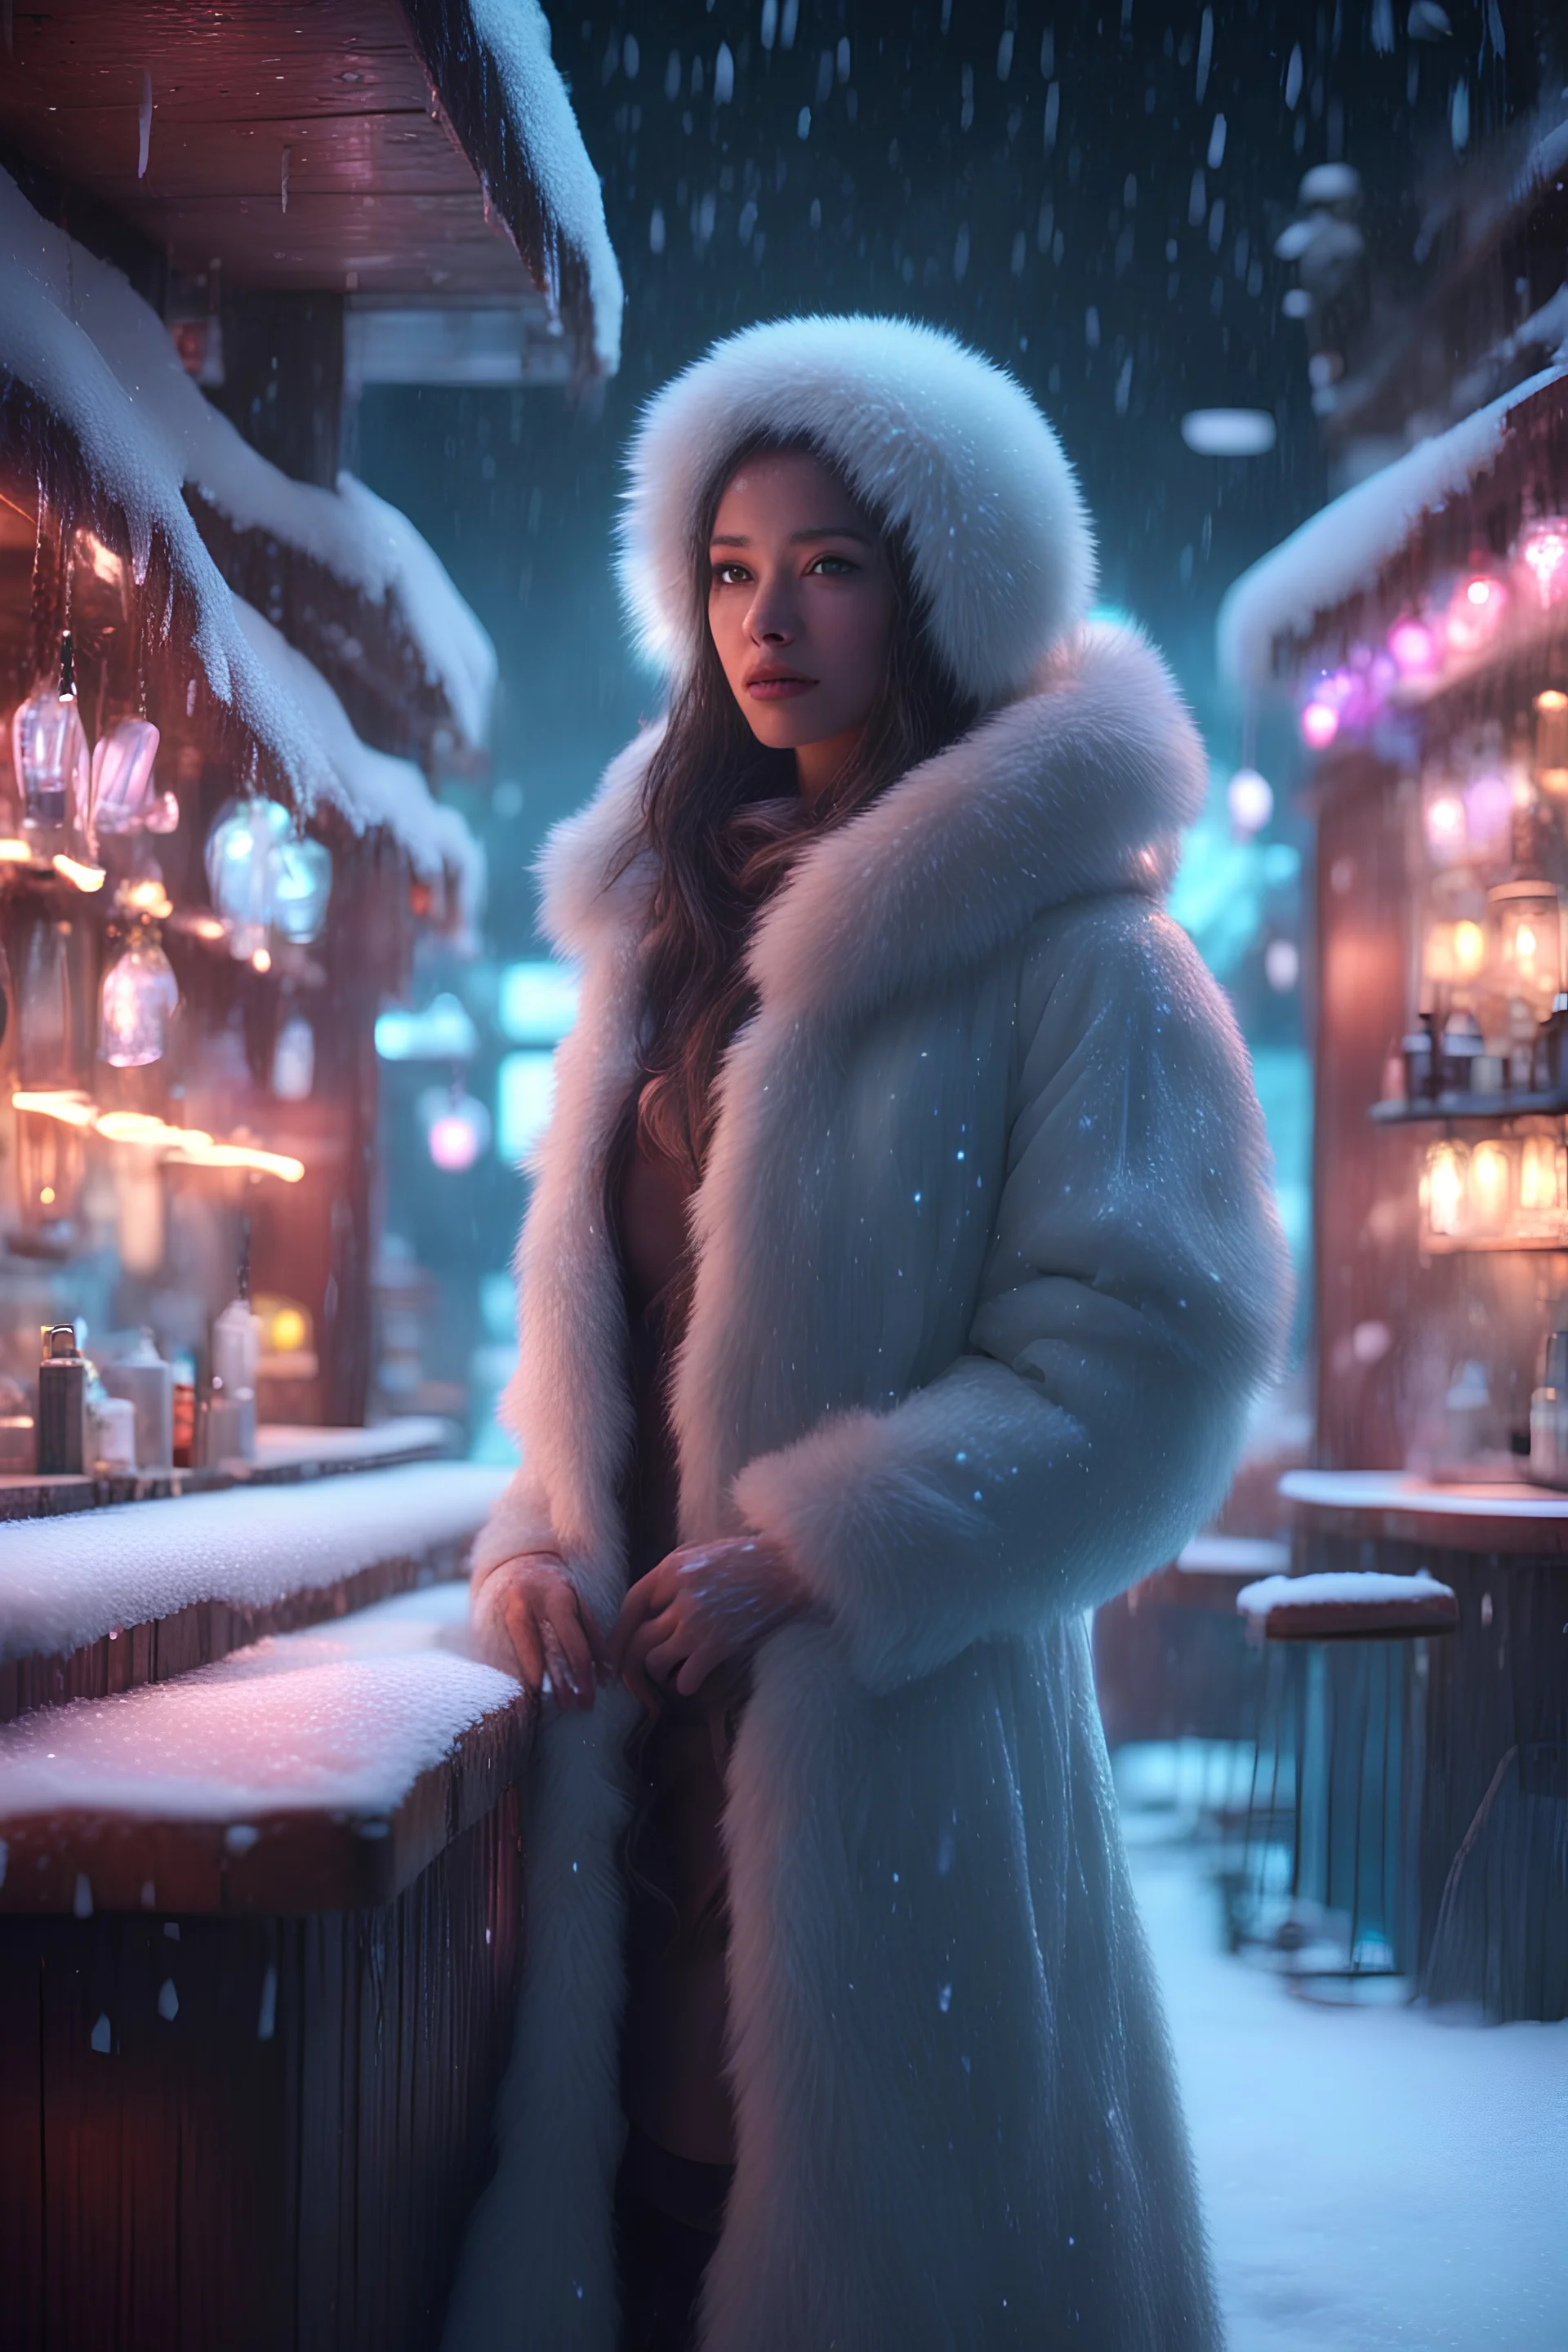 a pretty eskimo woman walks inside a bar, fantasy world, winter, neon lights, heavy snow falling, freeing cold, empty streets, fantasy world, 4k